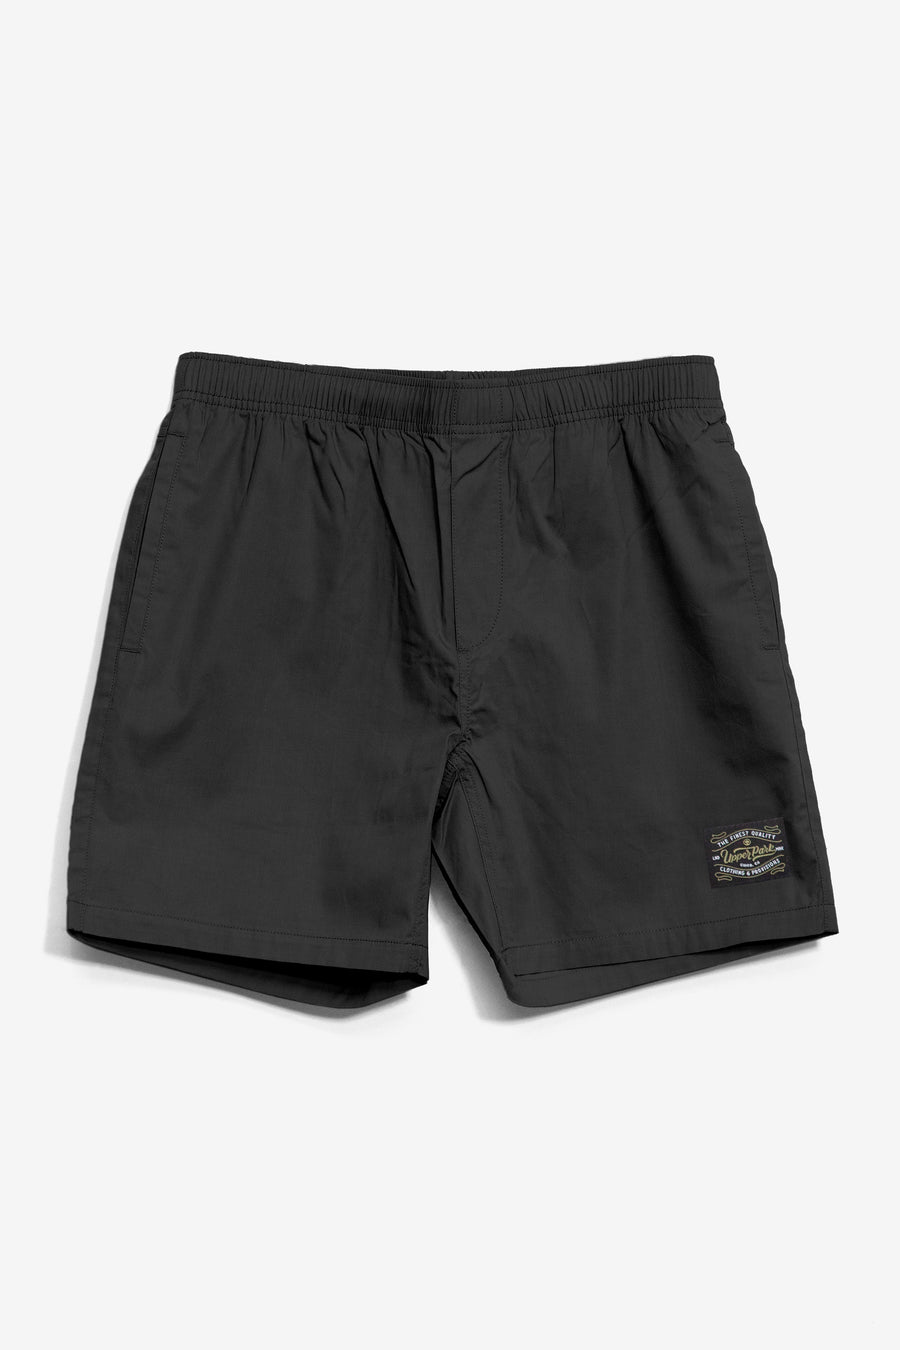 Pro Label 17" Beach Shorts - Black